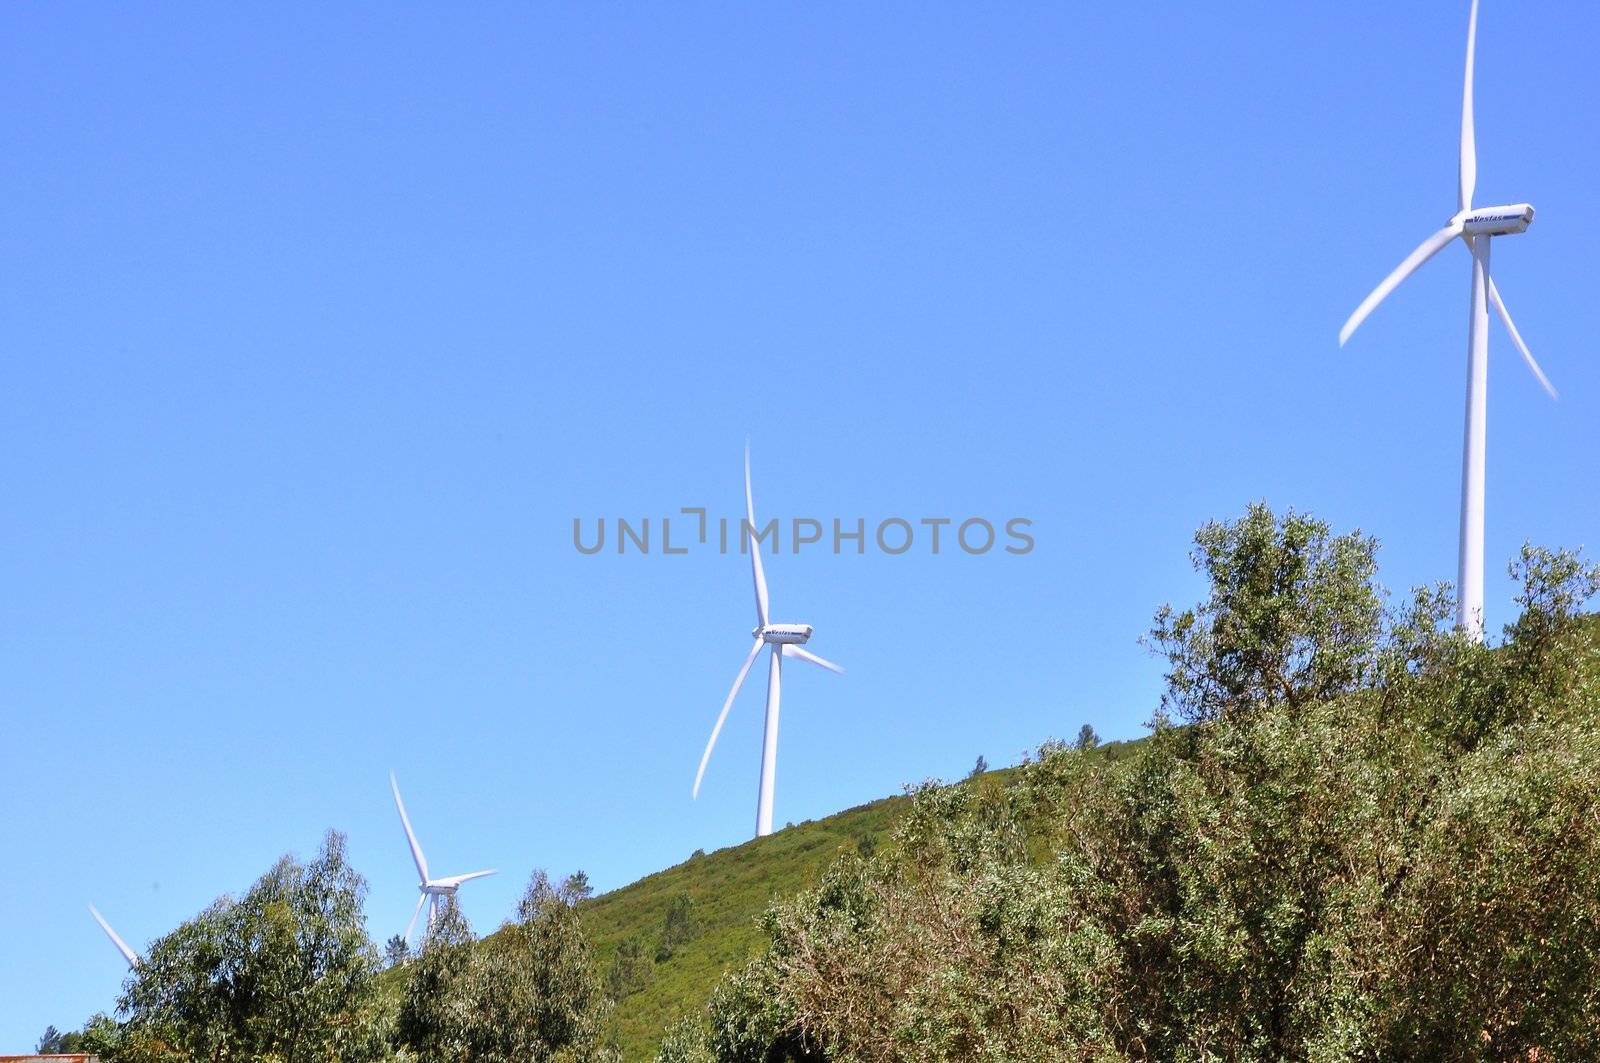 Landscape with wind power generators by vas25